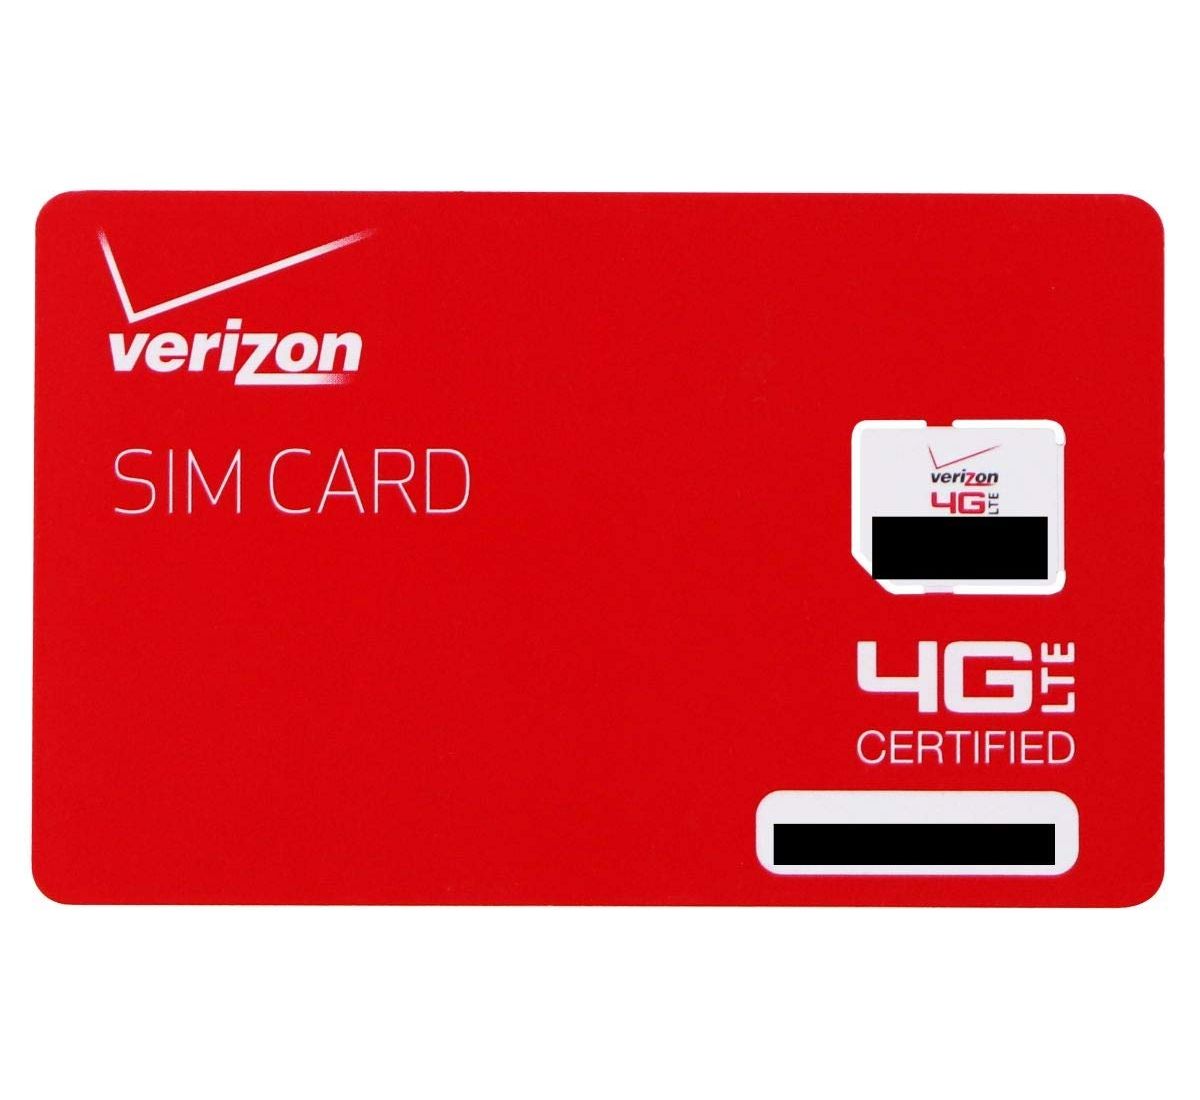 Troubleshooting: Fixing Locked Verizon SIM Card